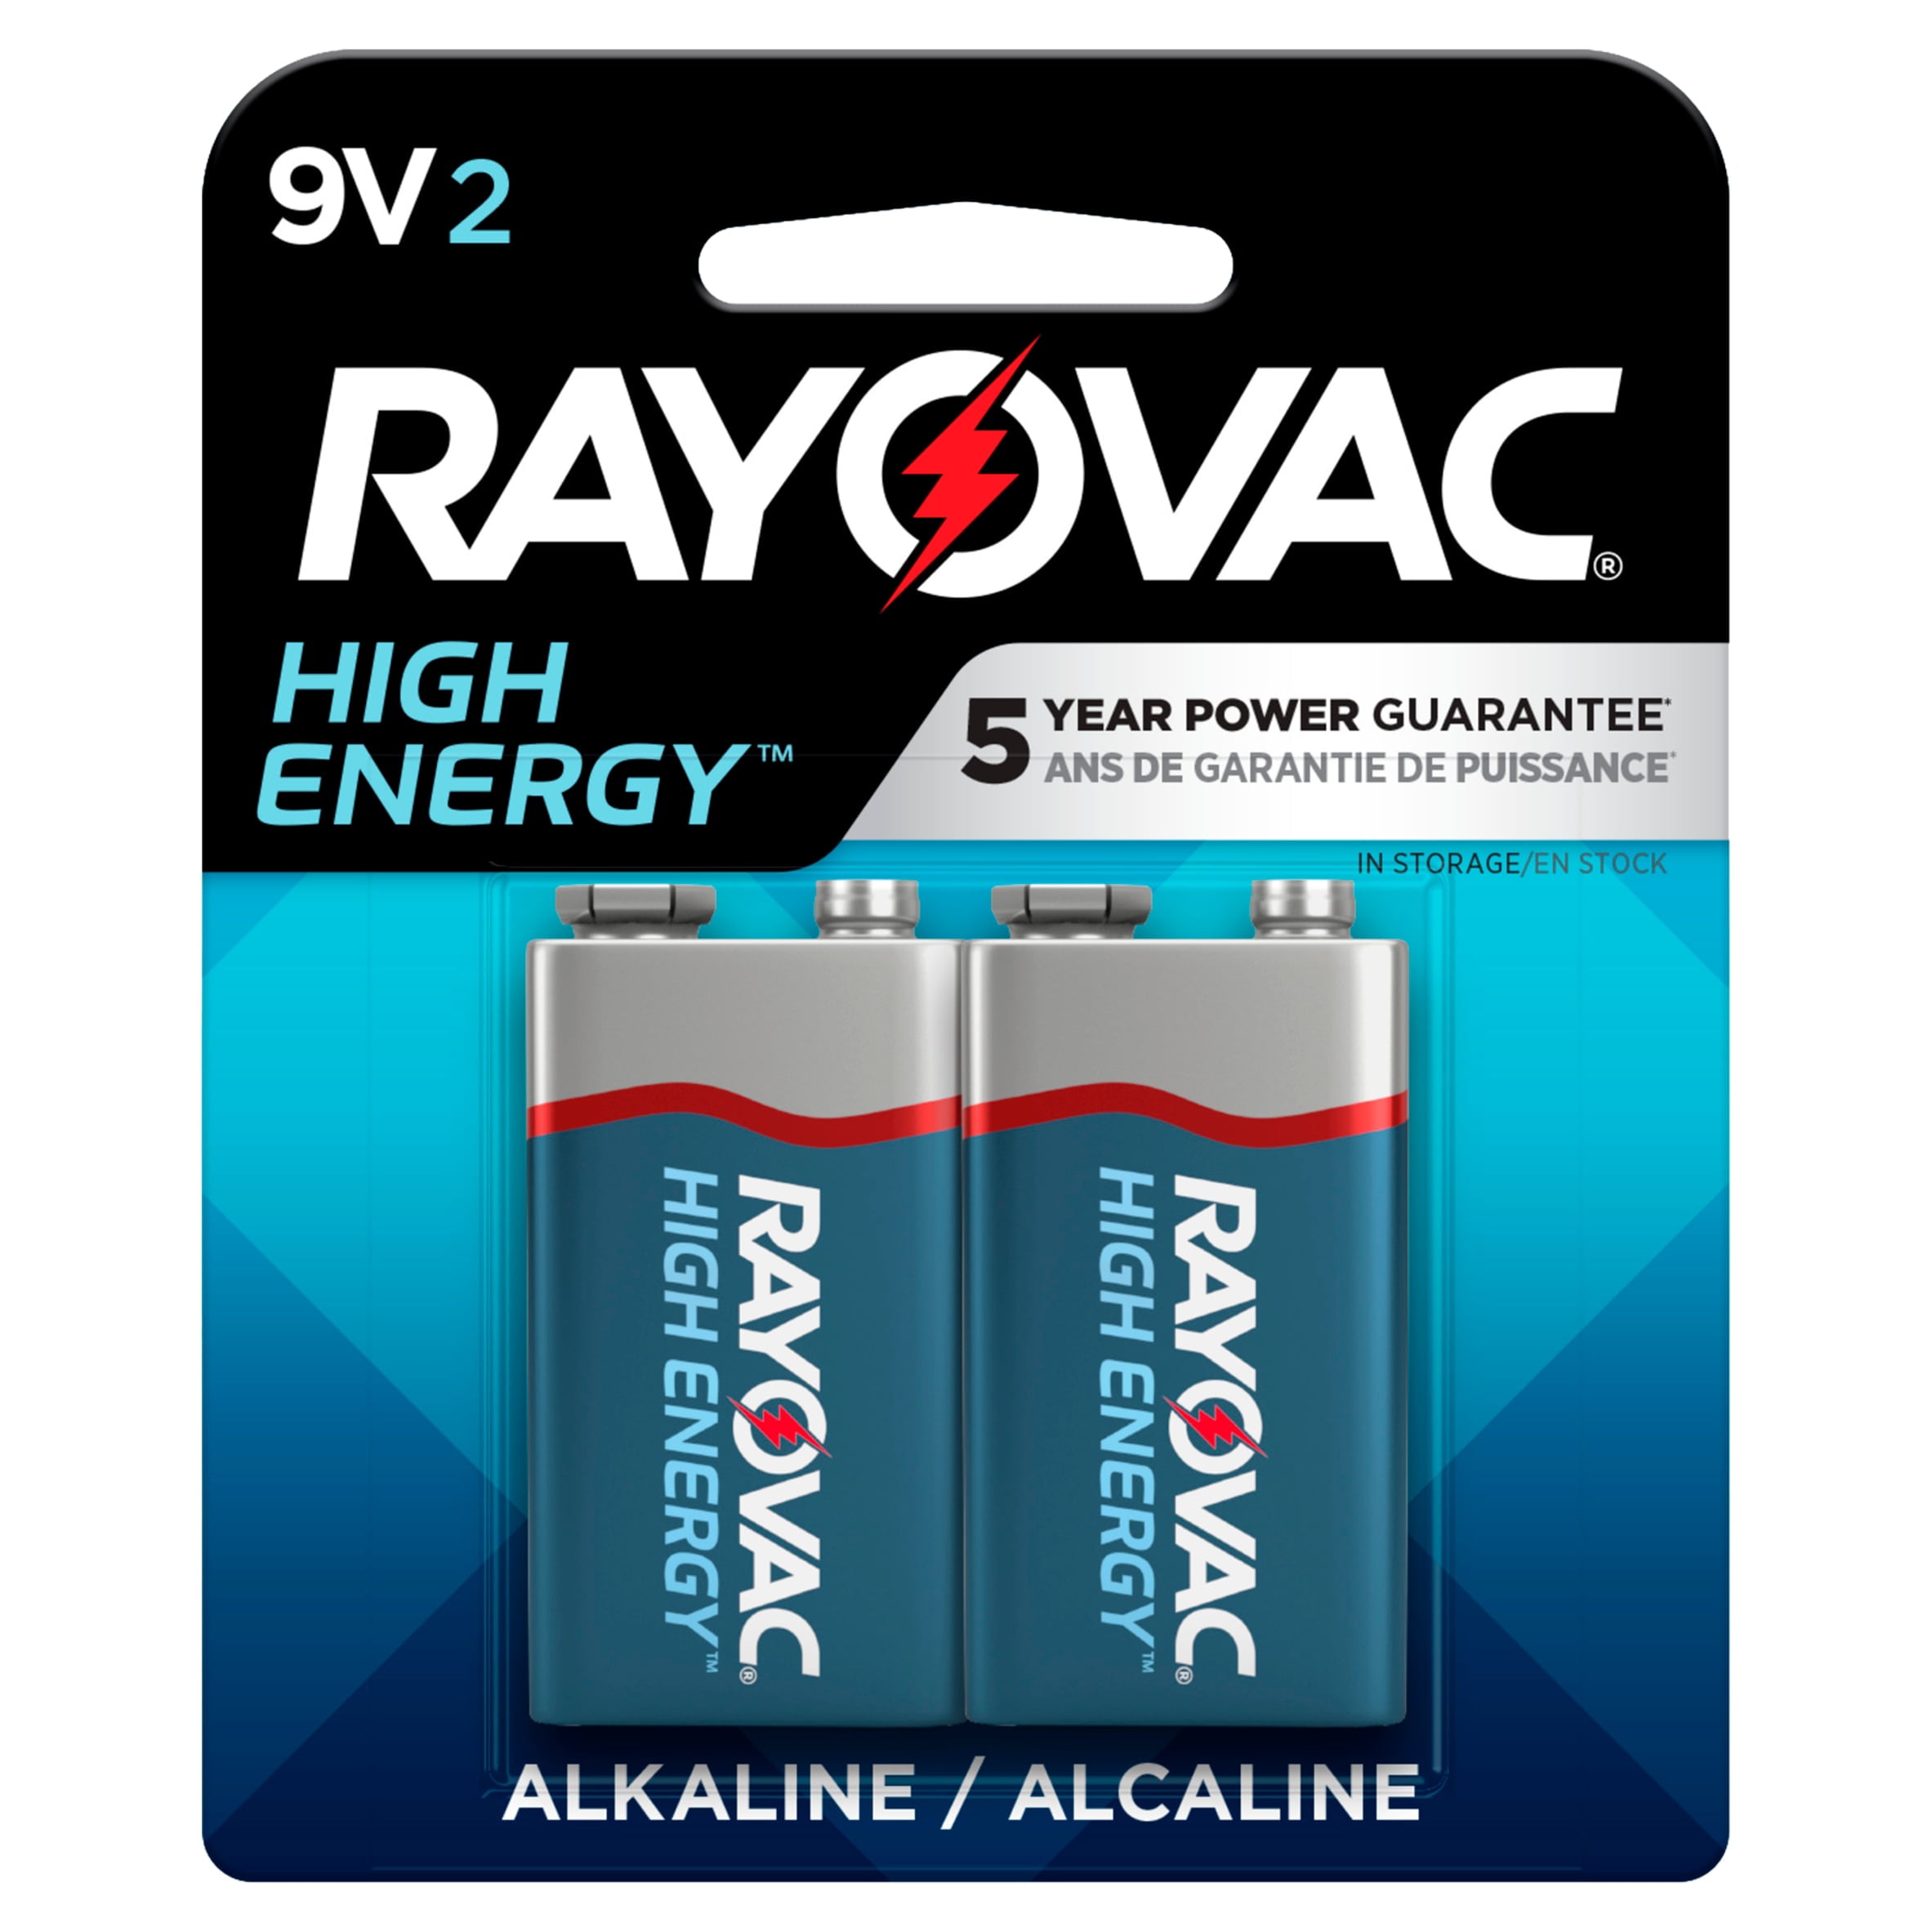 Rayovac High Energy 9V Alkaline Batteries, 2 count